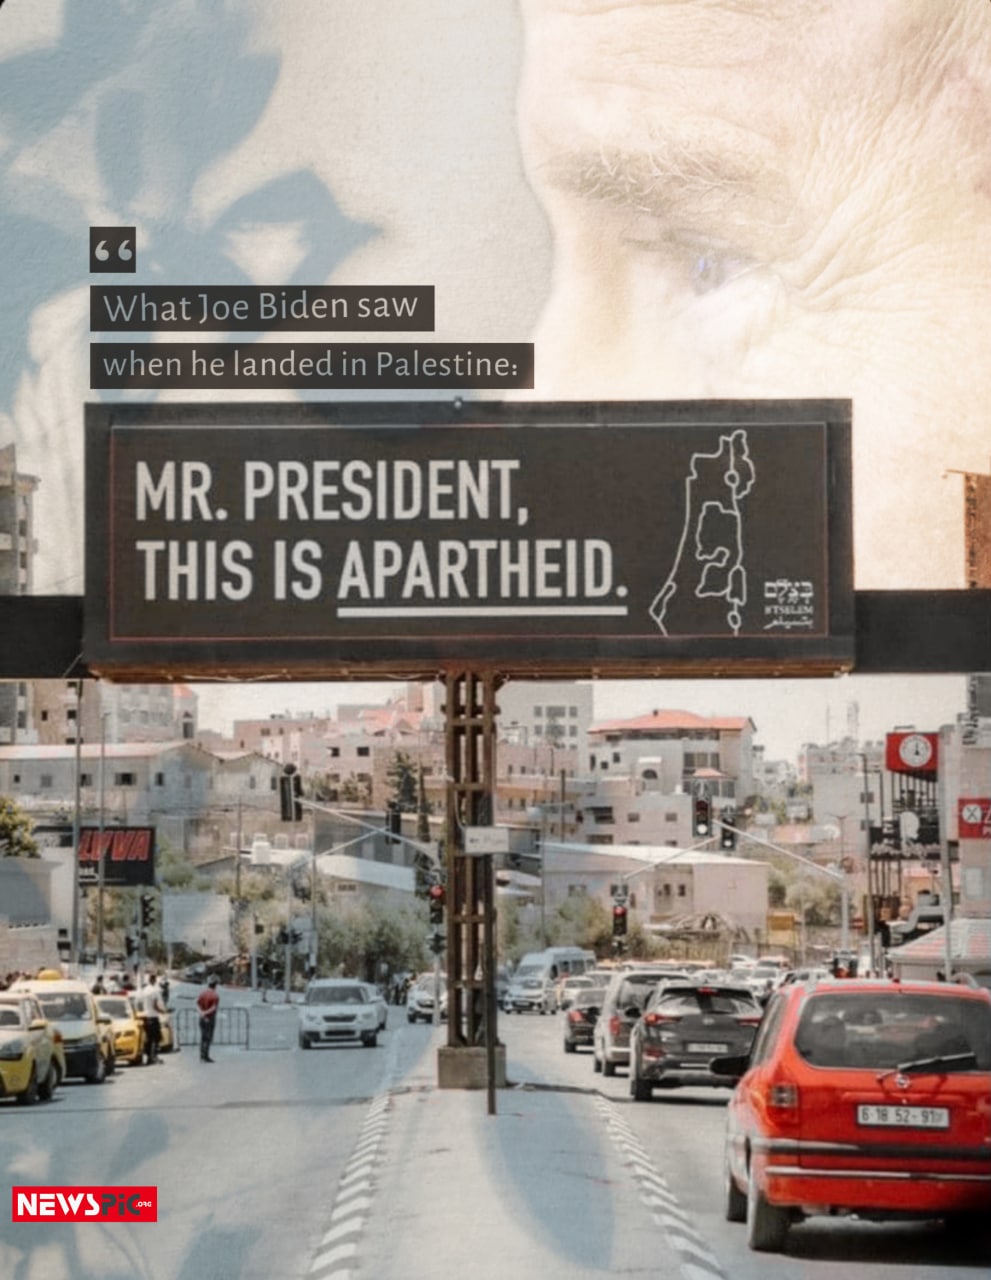 MR. president, this is apartheid